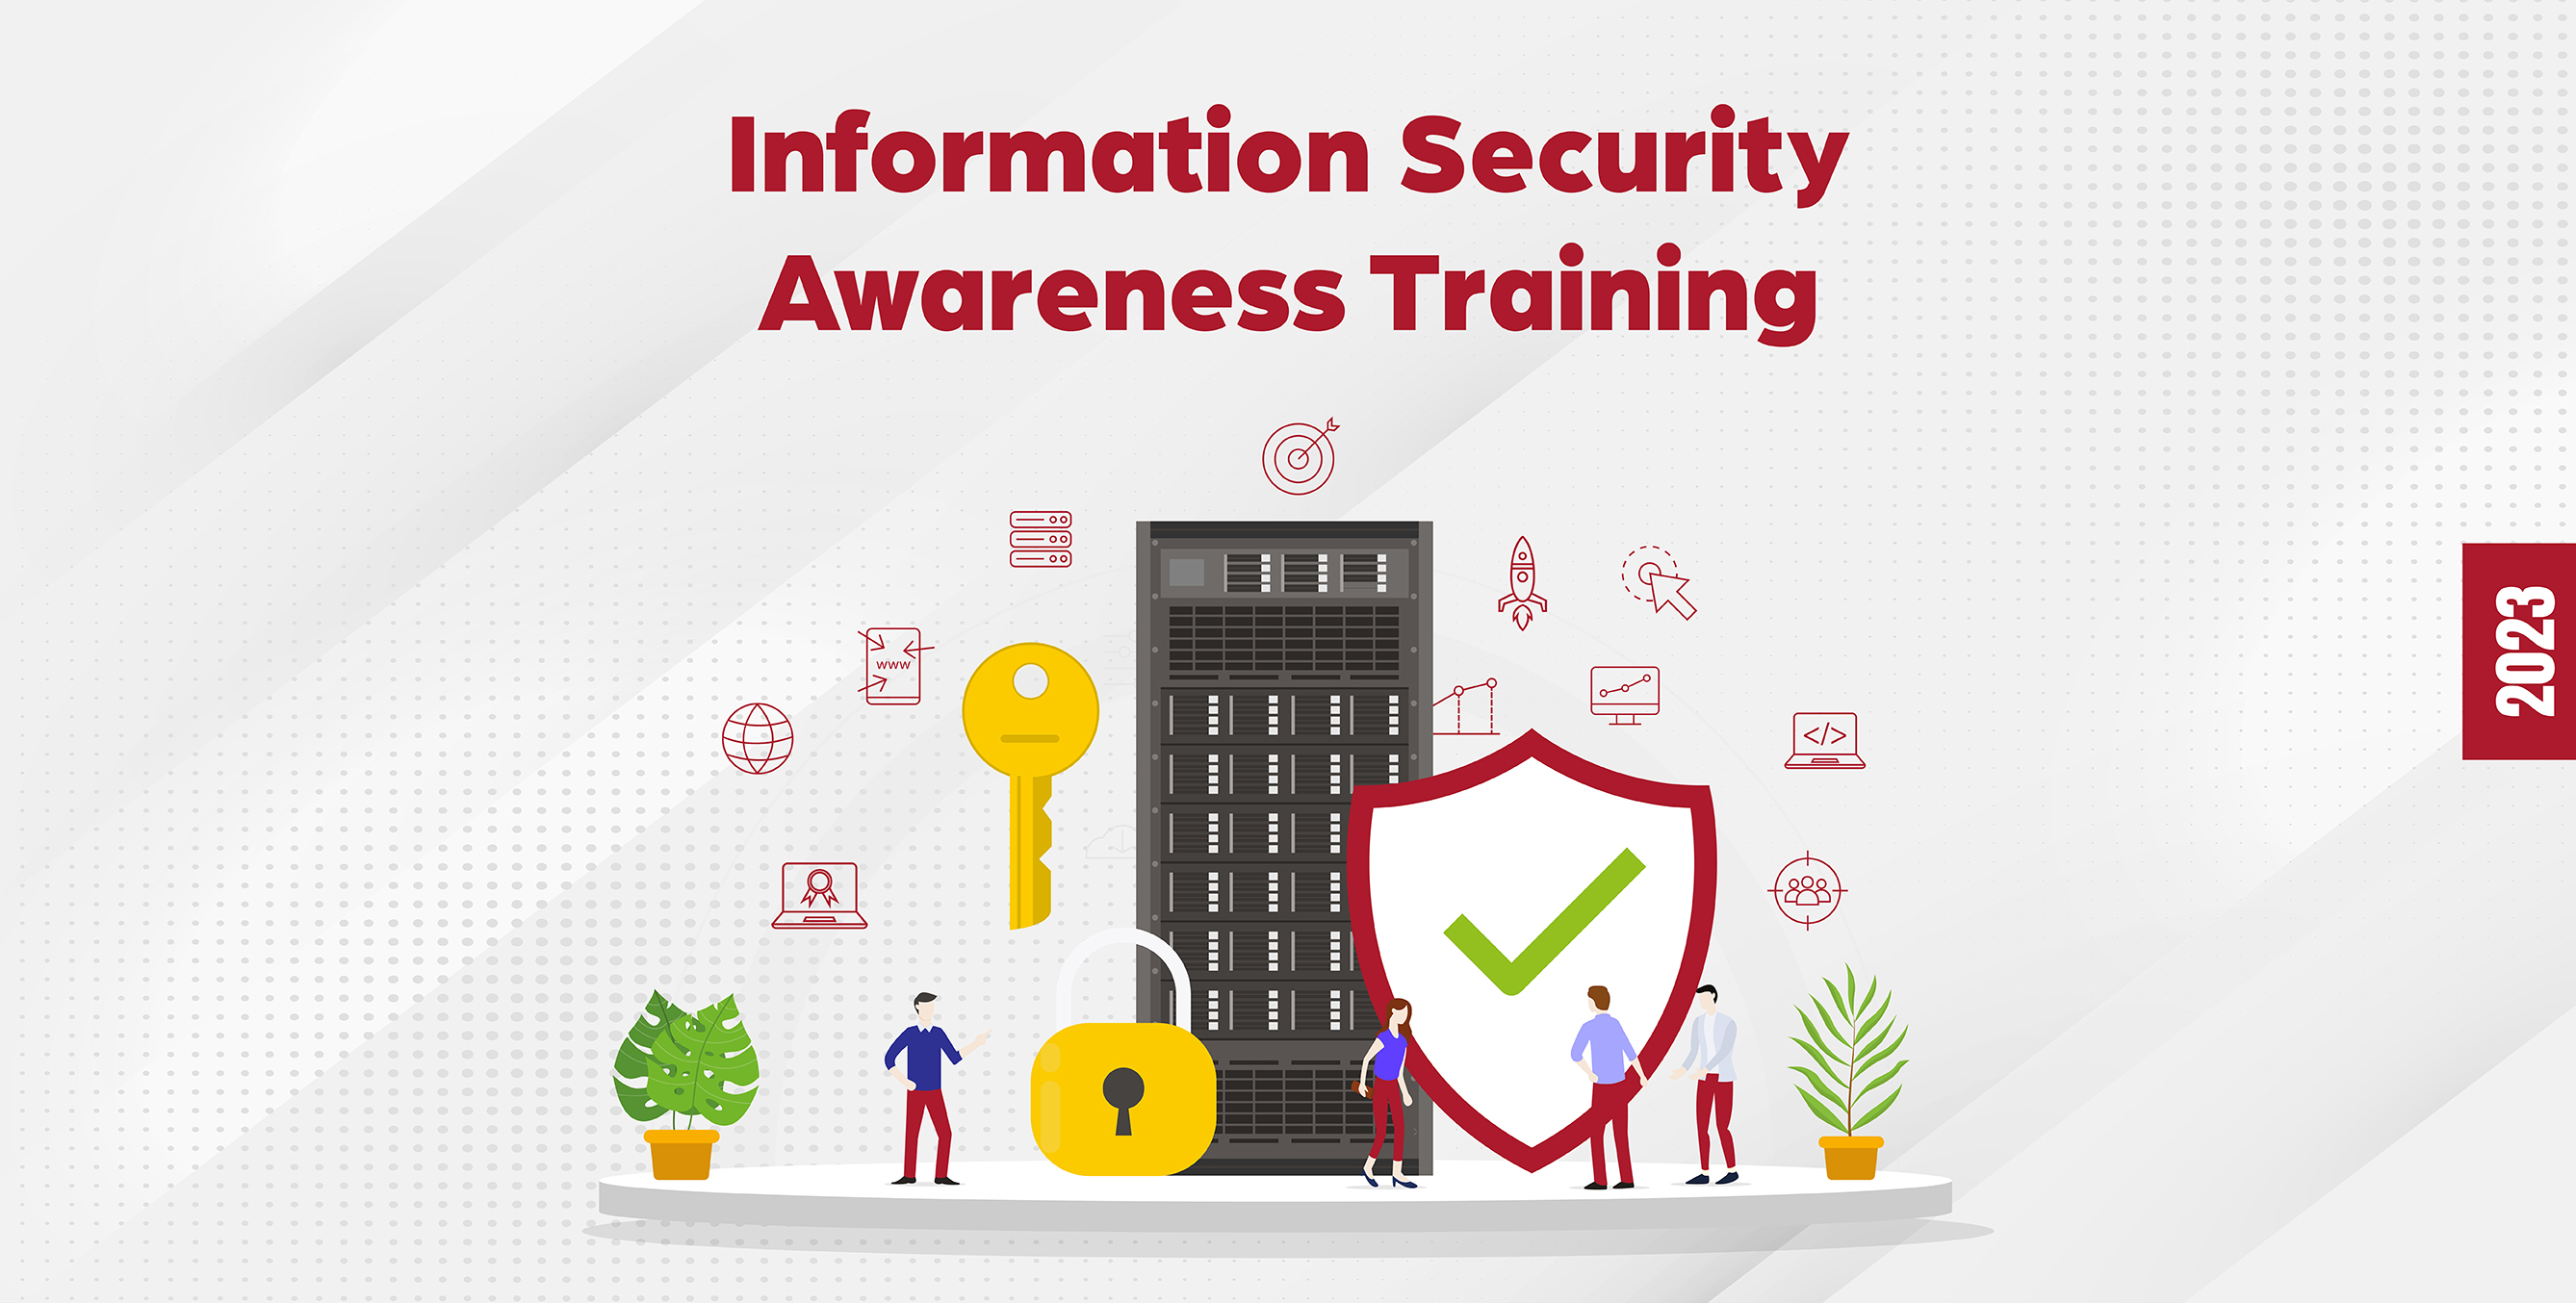 Information Security Awareness Training 2023 BG_02